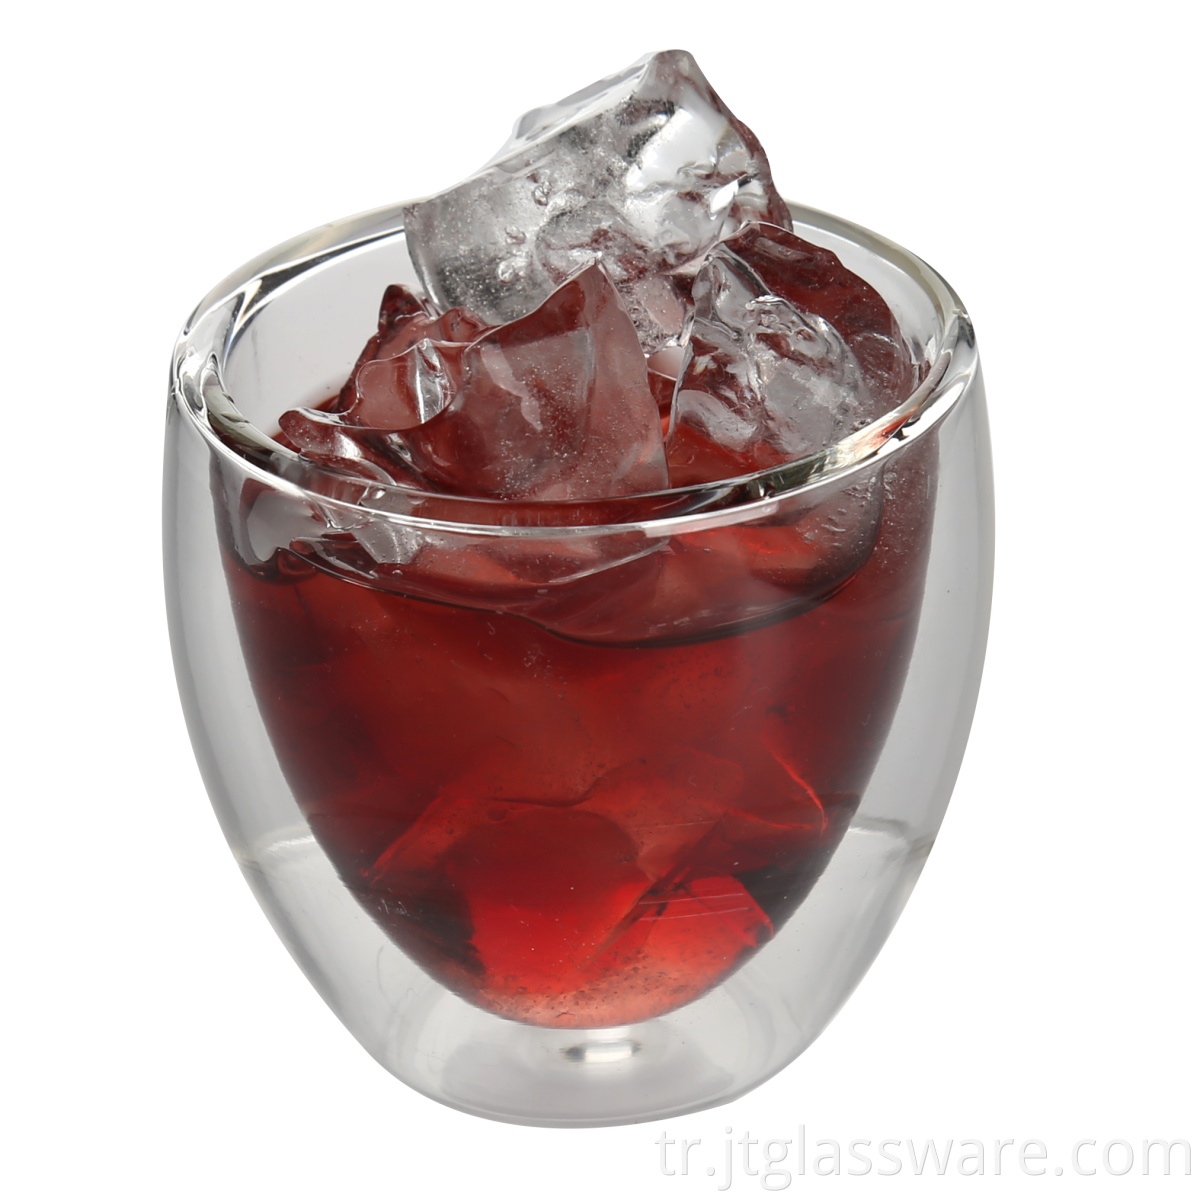 80ml borosilicate glass cup